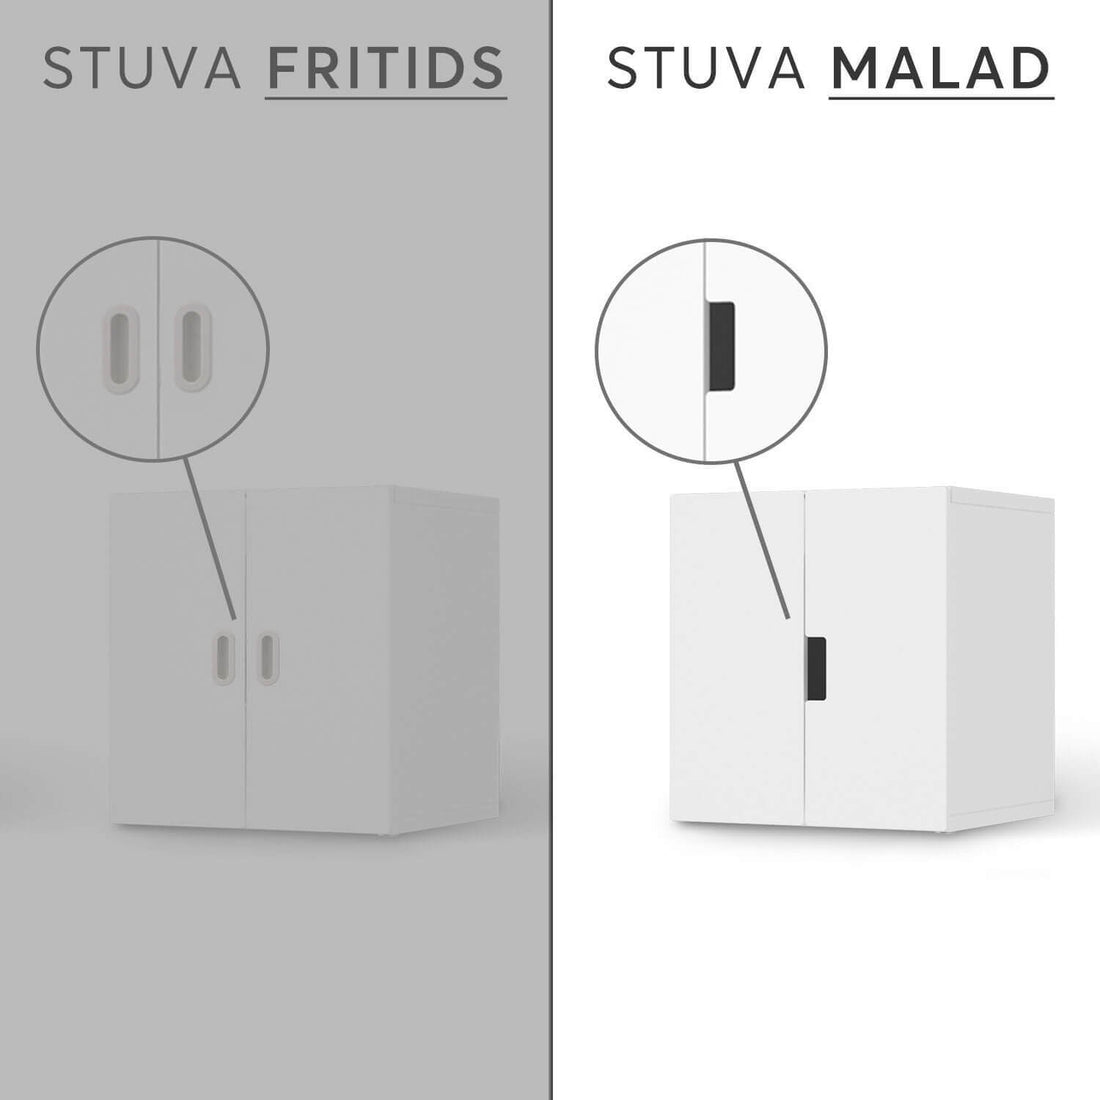 Vergleich IKEA Stuva Malad / Fritids - 2 kleine Eulen